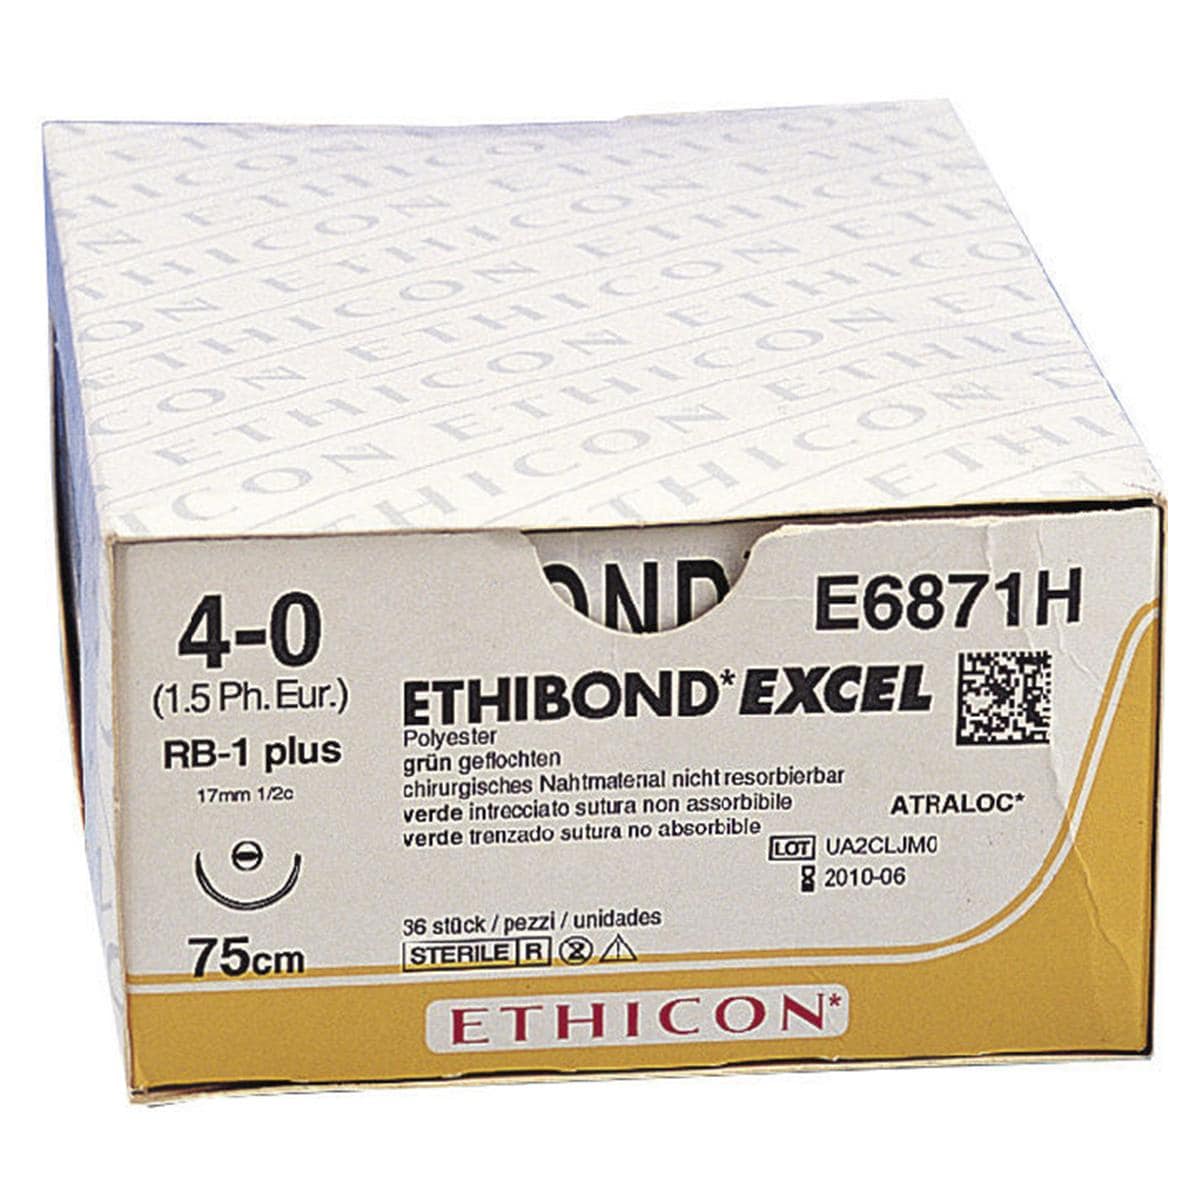 SUTURE ETHIBOND EXCEL - AGO DORSO TAGLIENTE - FILO CM 45 - E 6683 H - FS-2 3/8 cerchio - 4/0 (1,5) mm 19 - 36 pz.